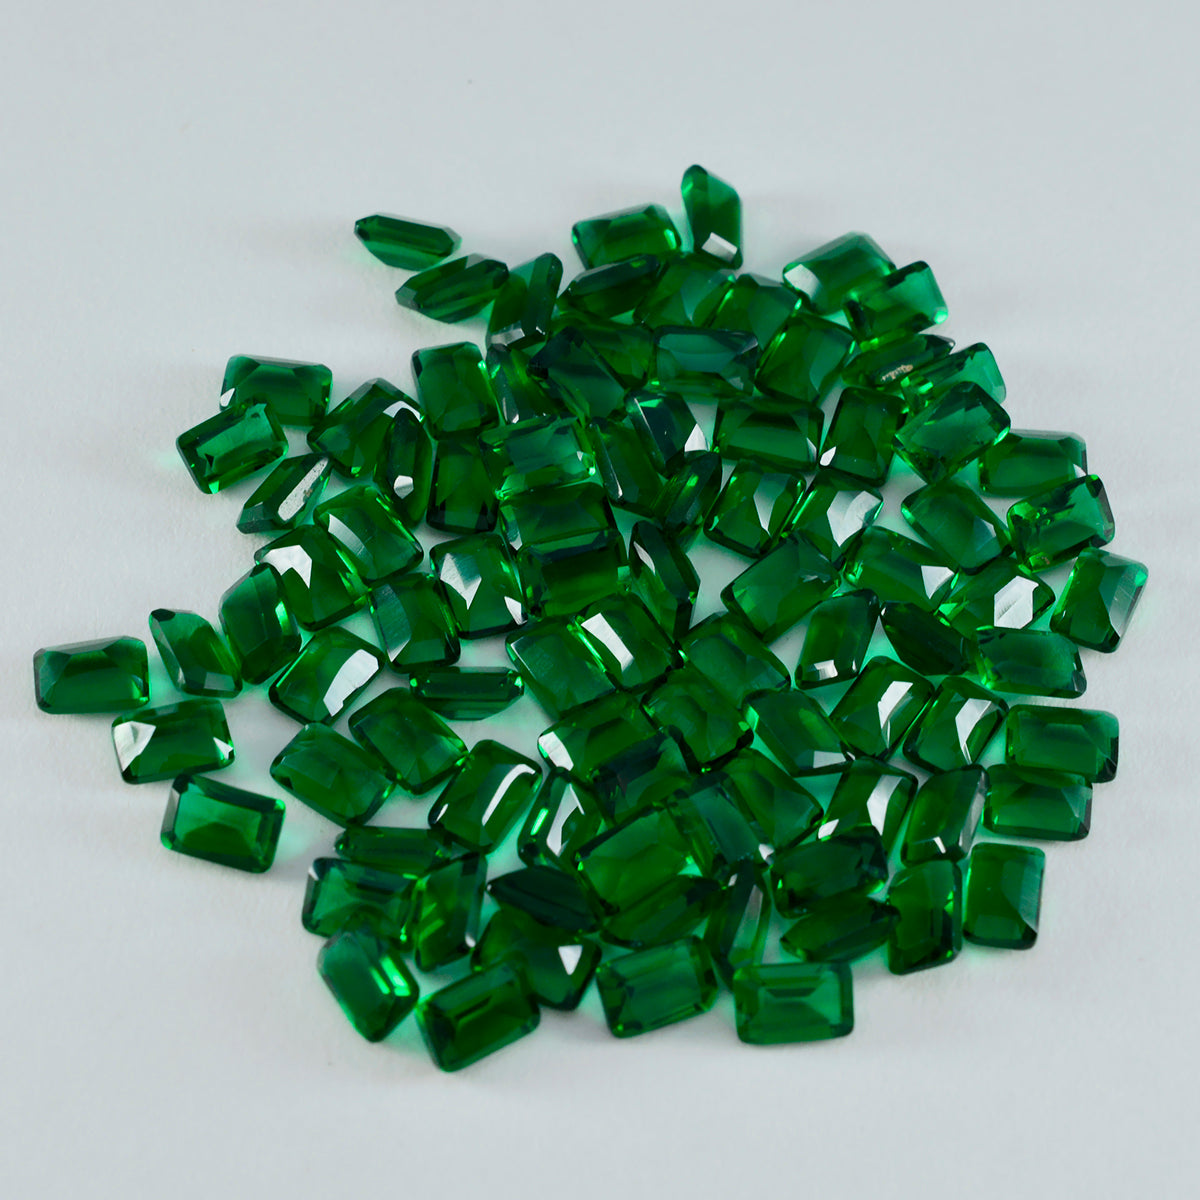 Riyogems 1 Stück grüner Smaragd, CZ, facettiert, 3 x 5 mm, achteckige Form, A+1-Qualität, lose Edelsteine